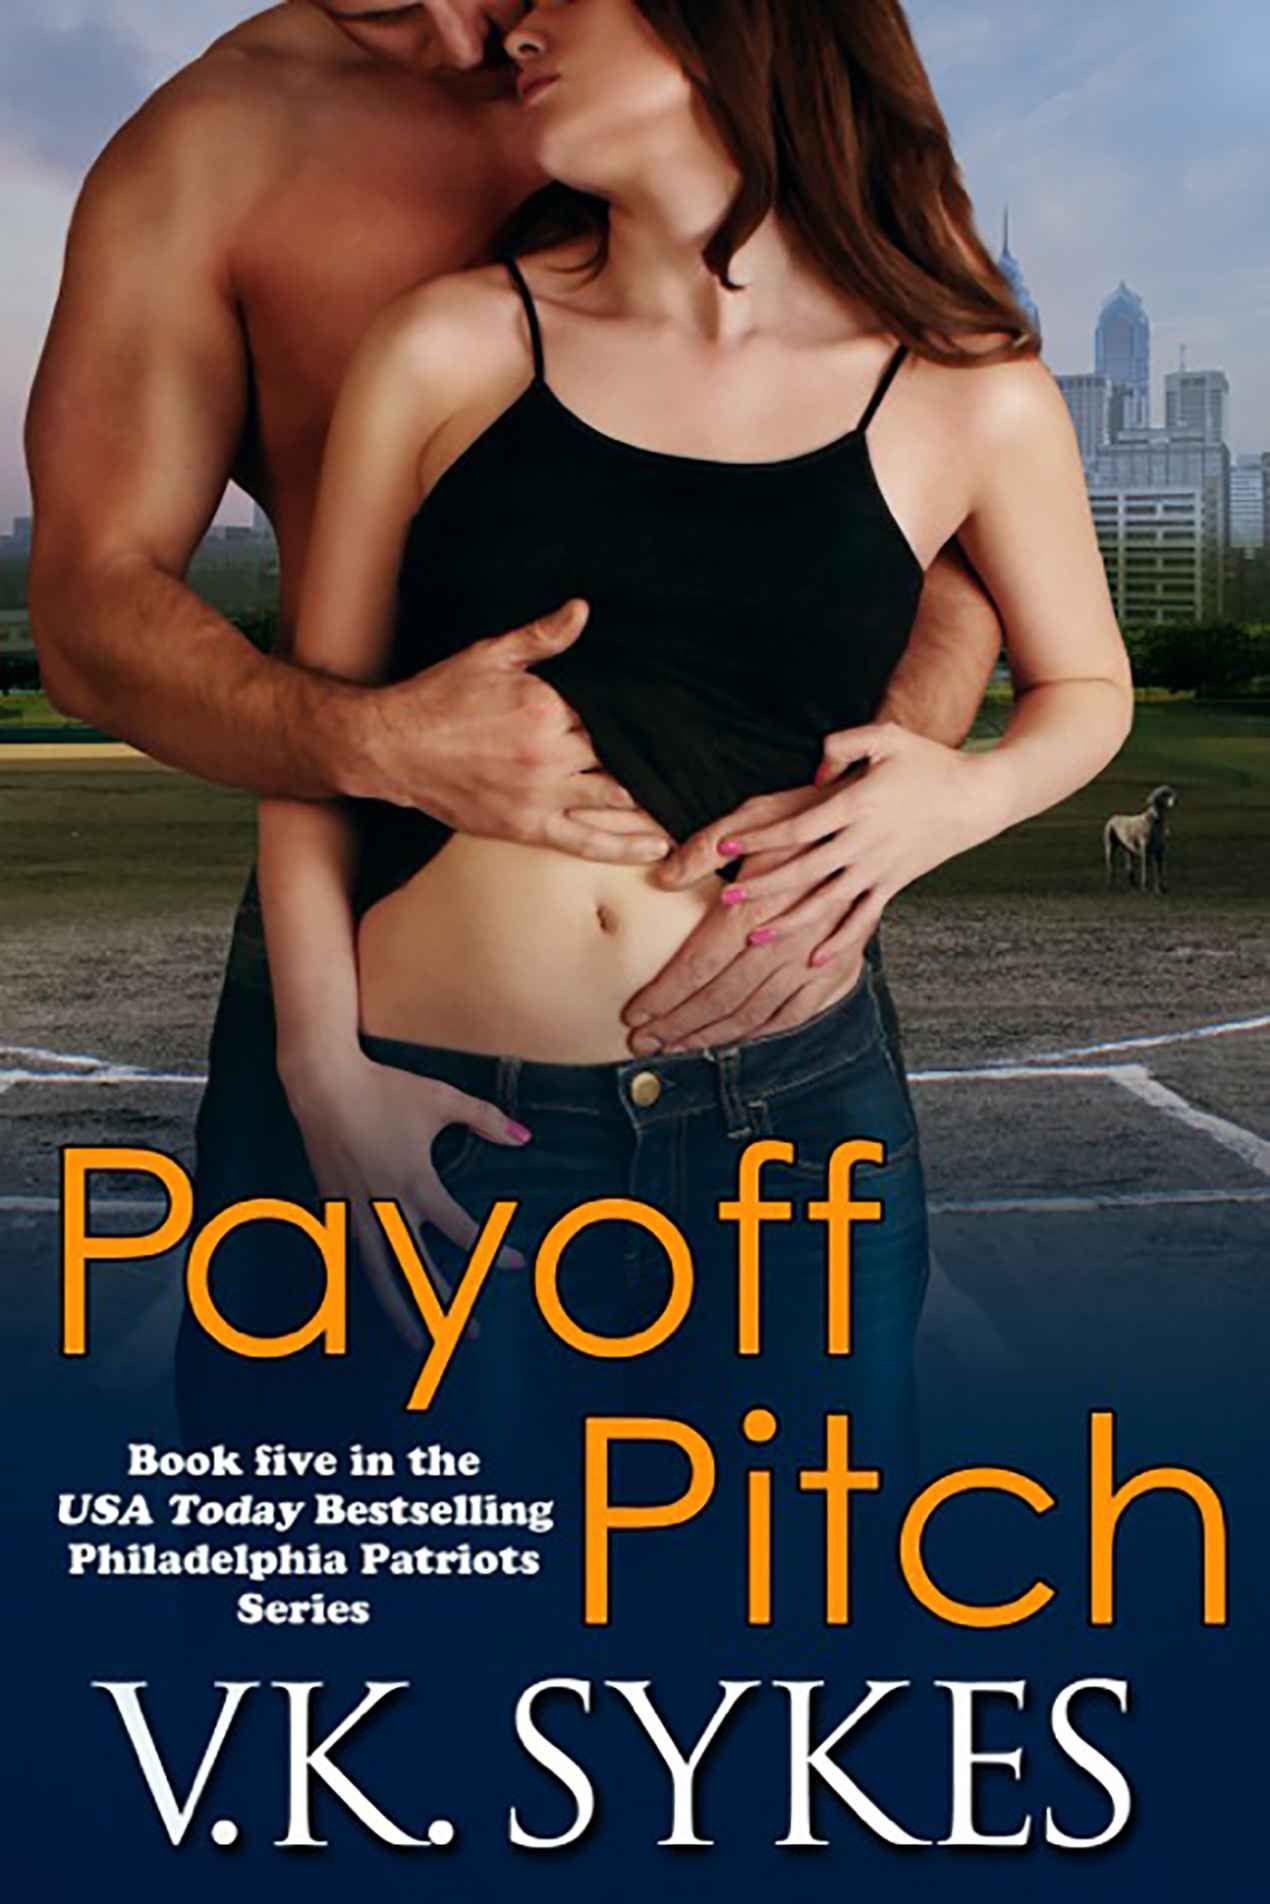 Payoff Pitch (Philadelphia Patriots)